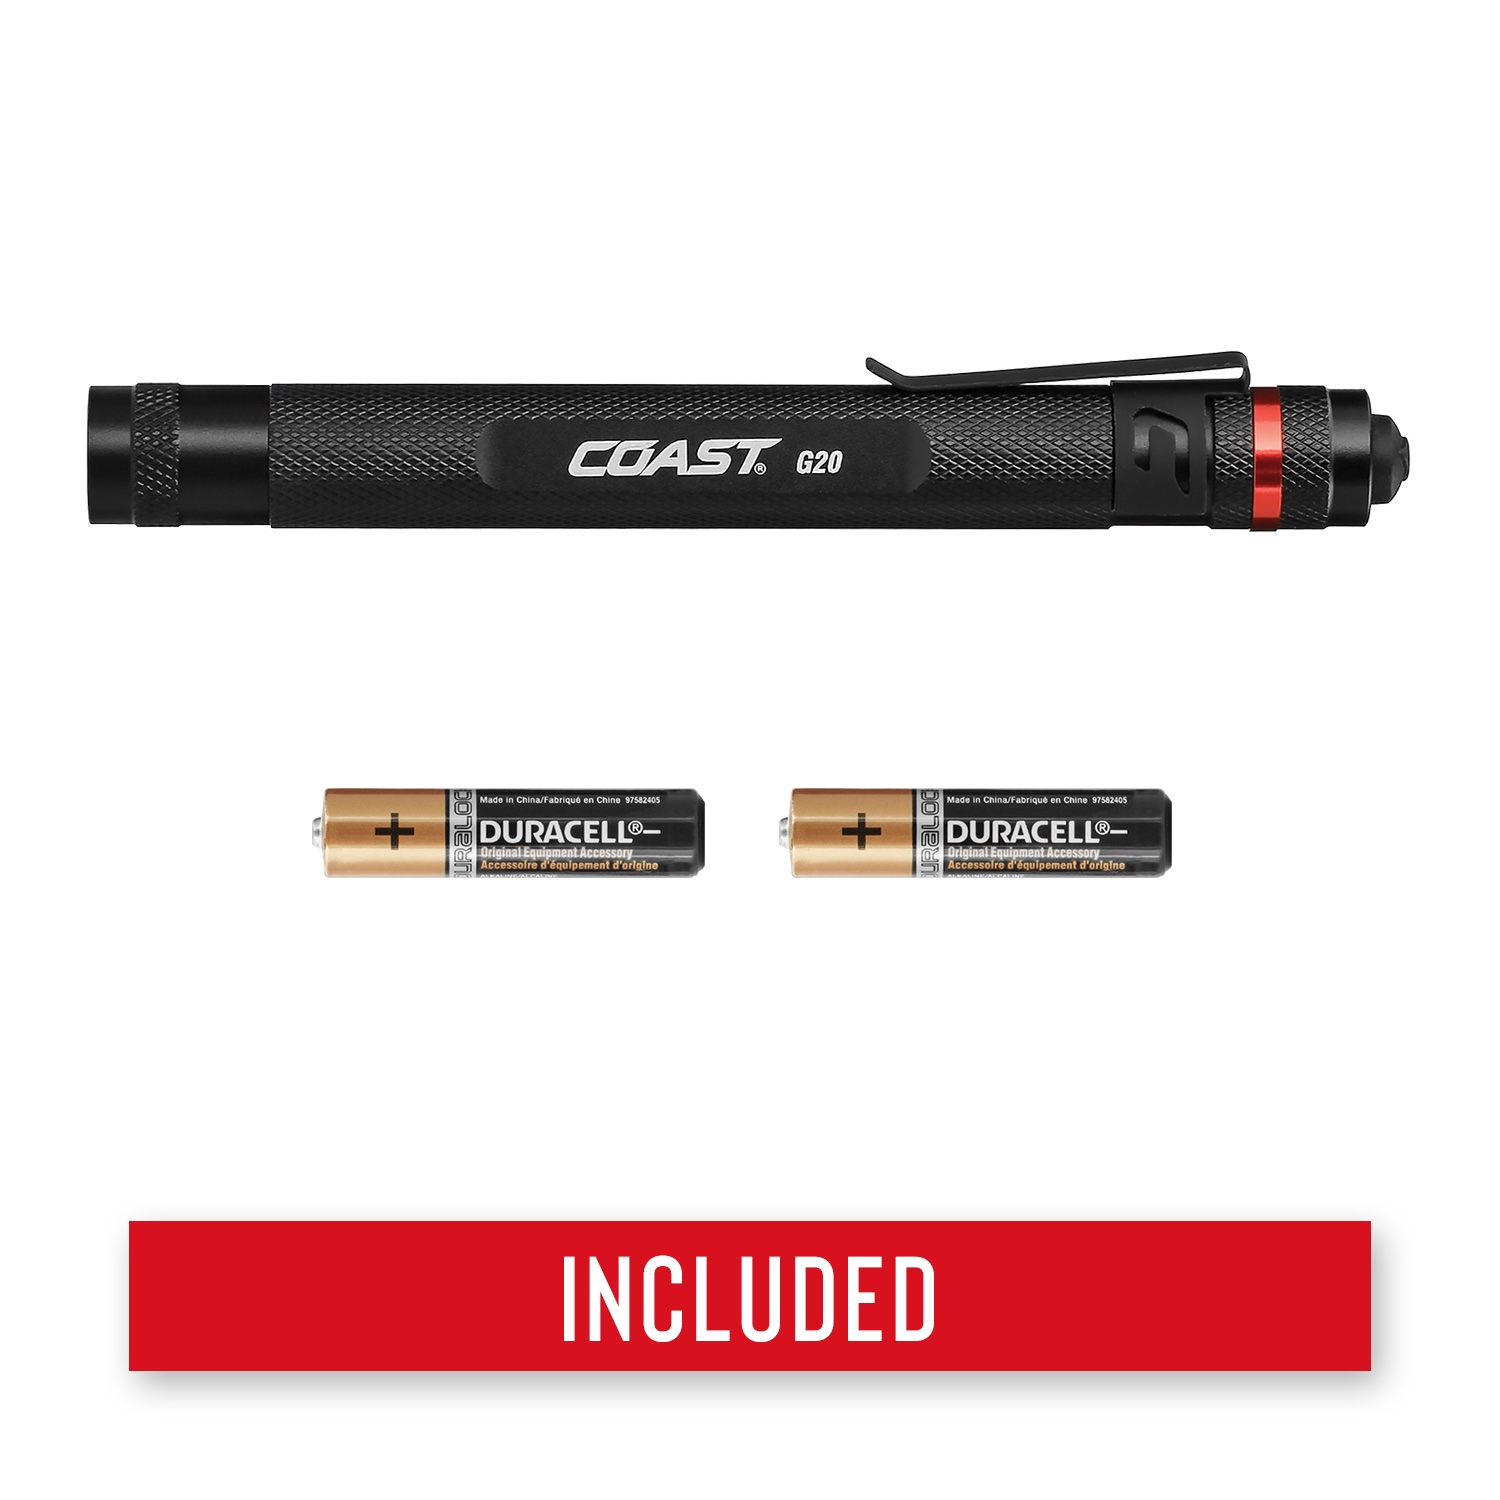 COAST G20 Dual Power 120 Lumen Inspection Beam LED Penlight, 4.2 oz - image 4 of 5